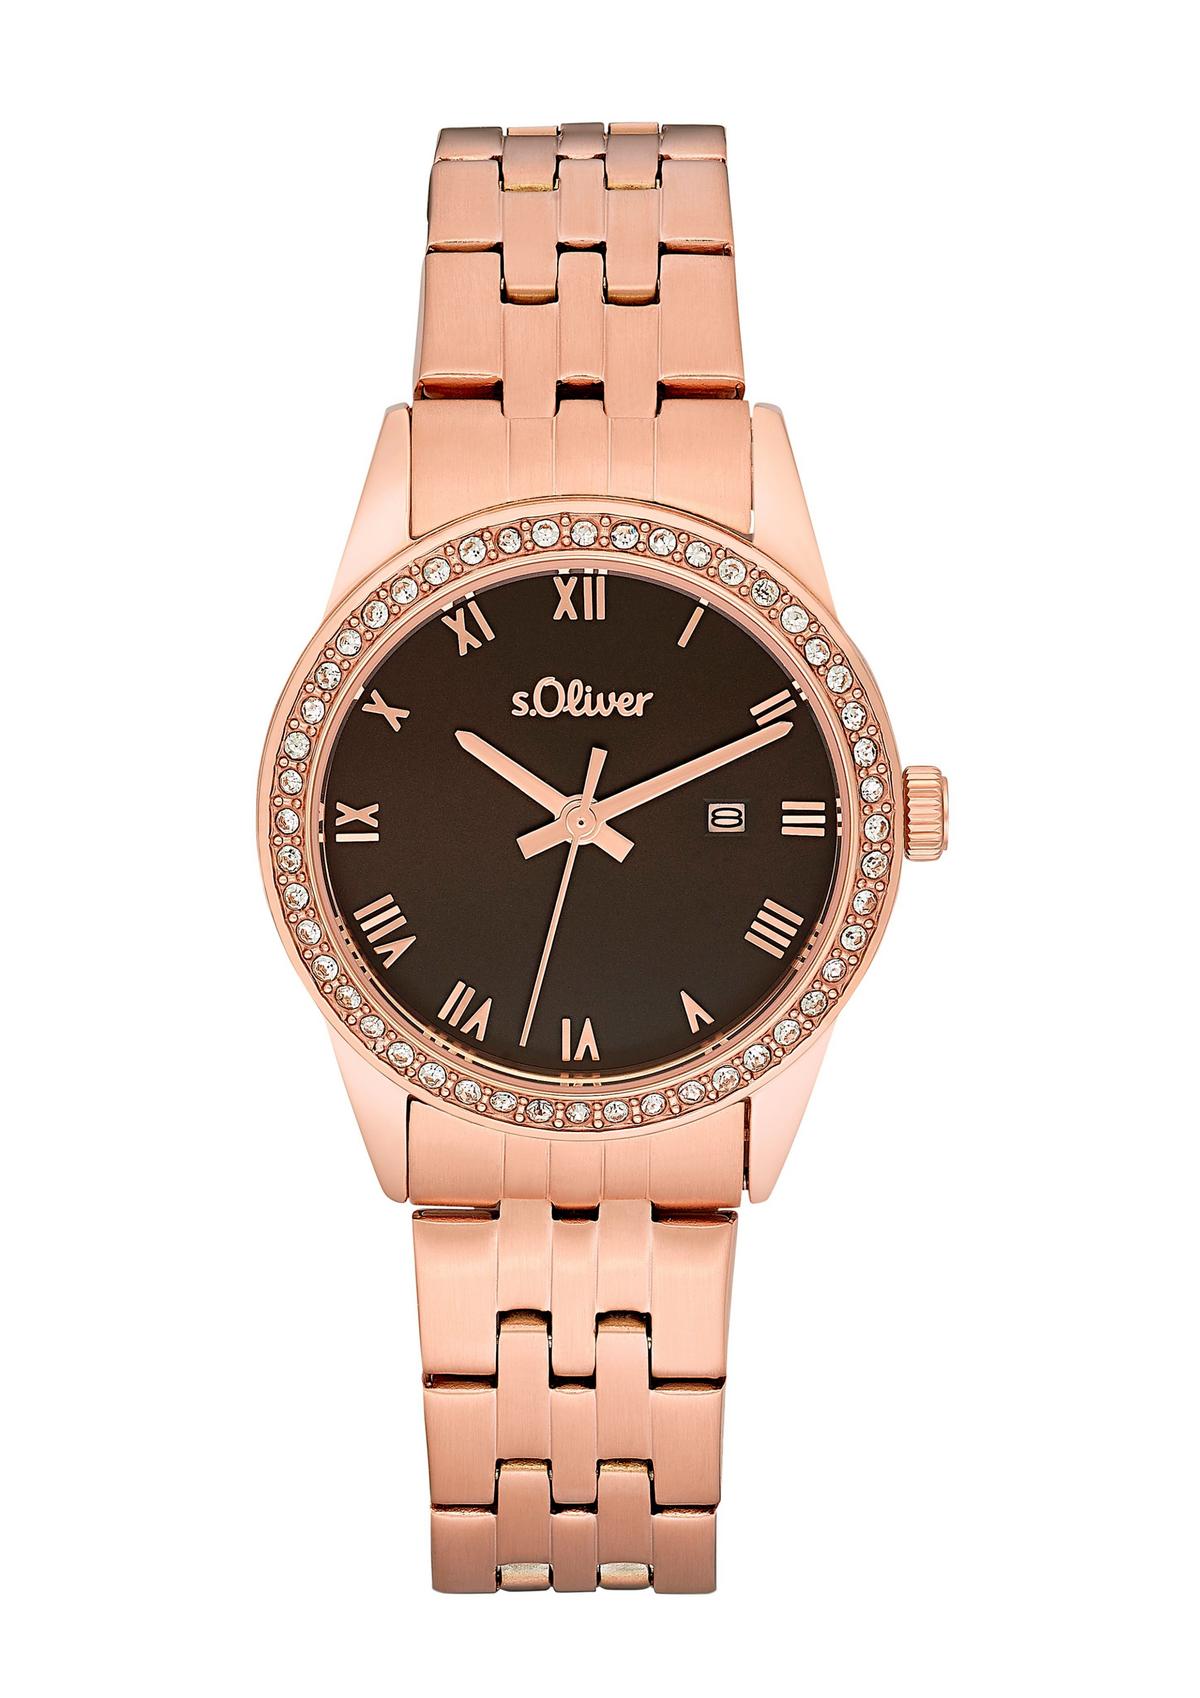 s.Oliver Modern horloge van edelstaal